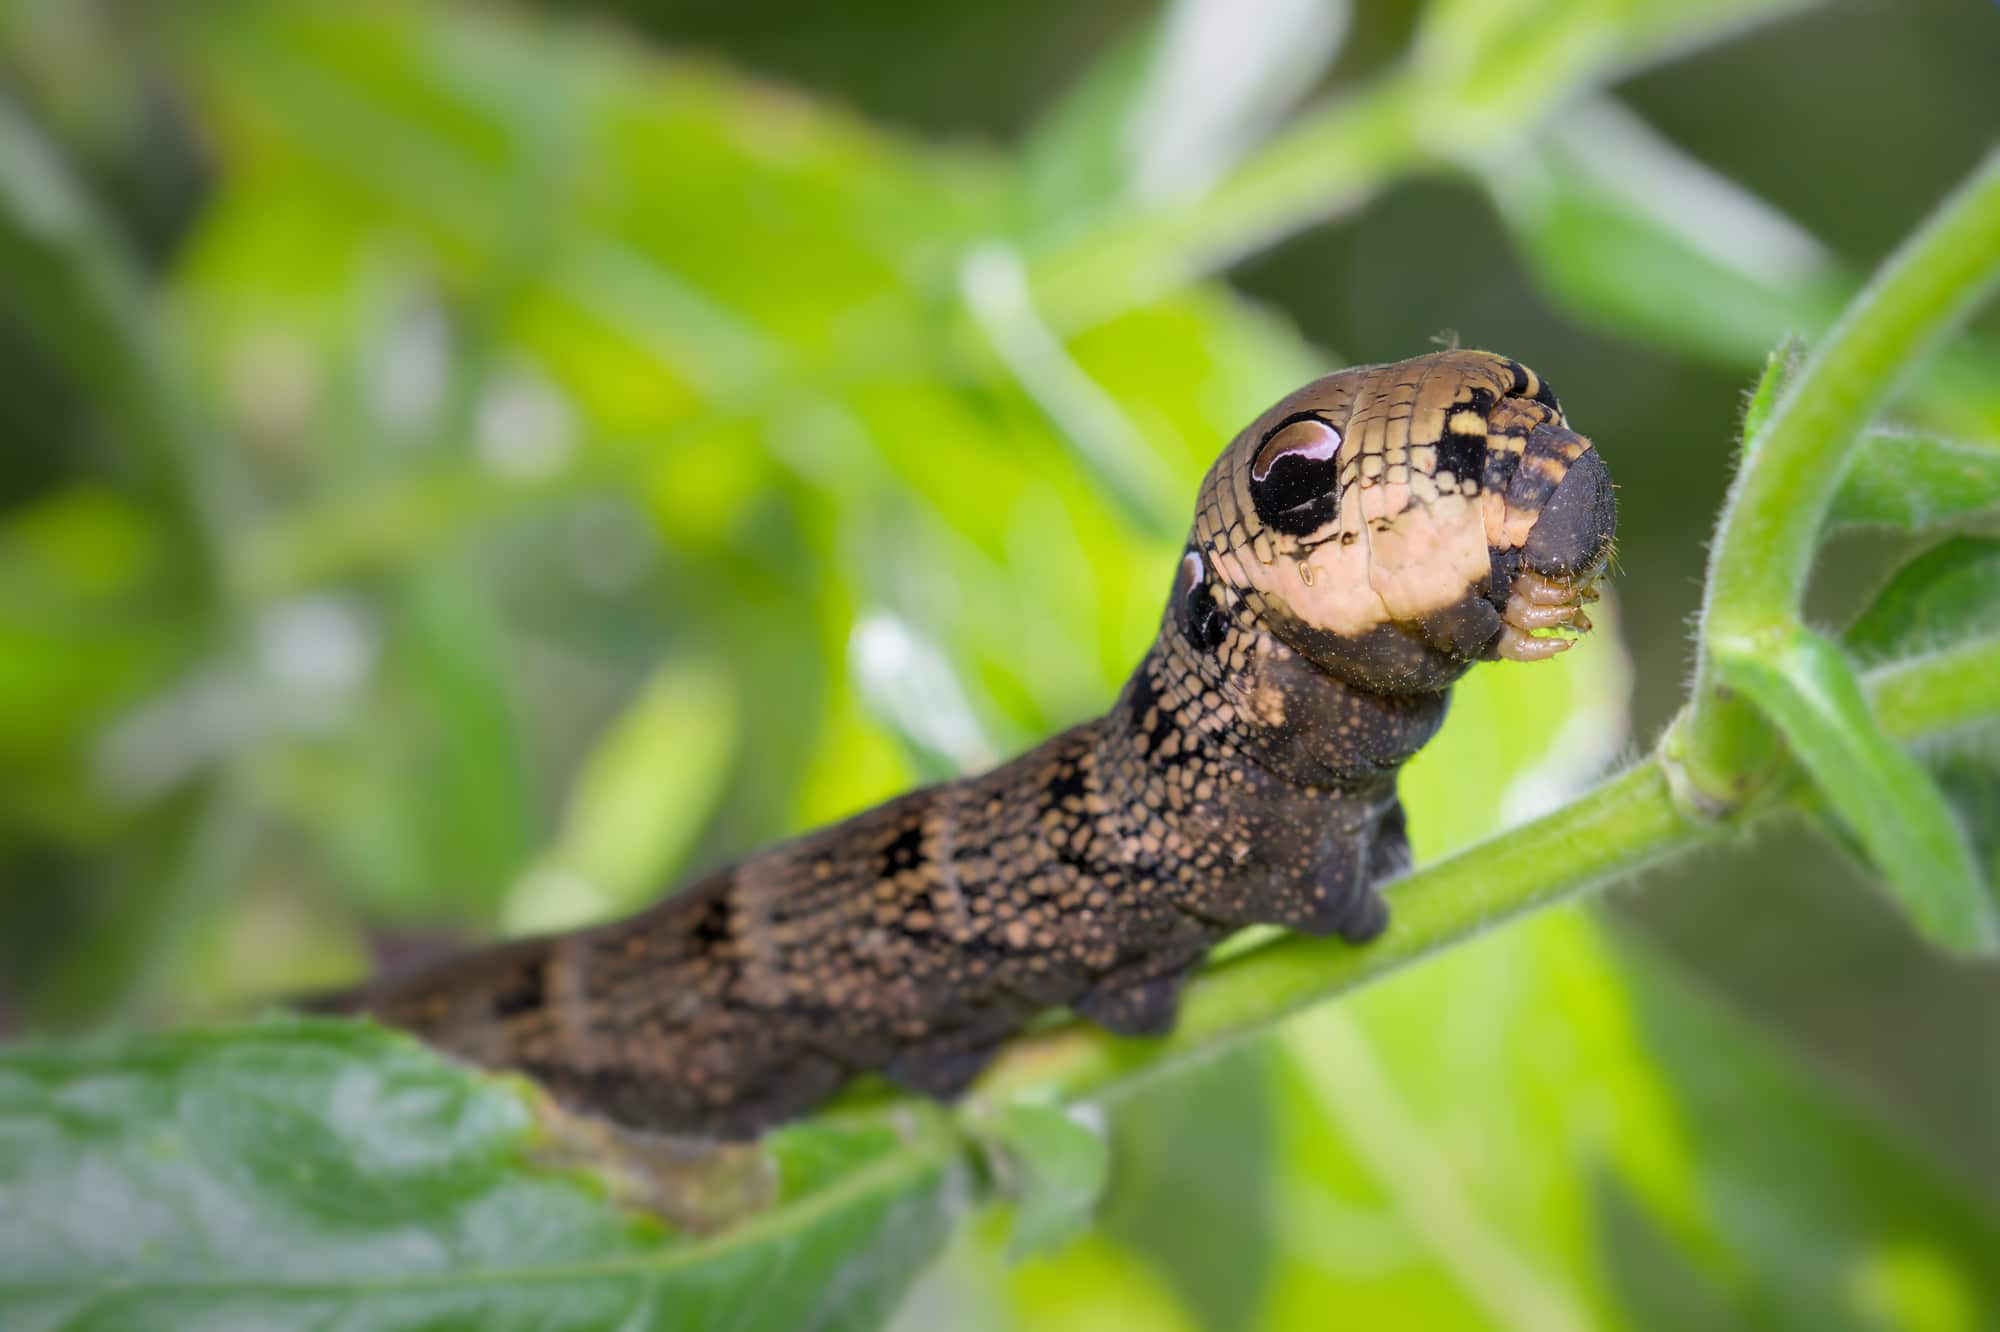 Deilephila elpenor, On A Plant Showing The distinctive Snake Like Head. 